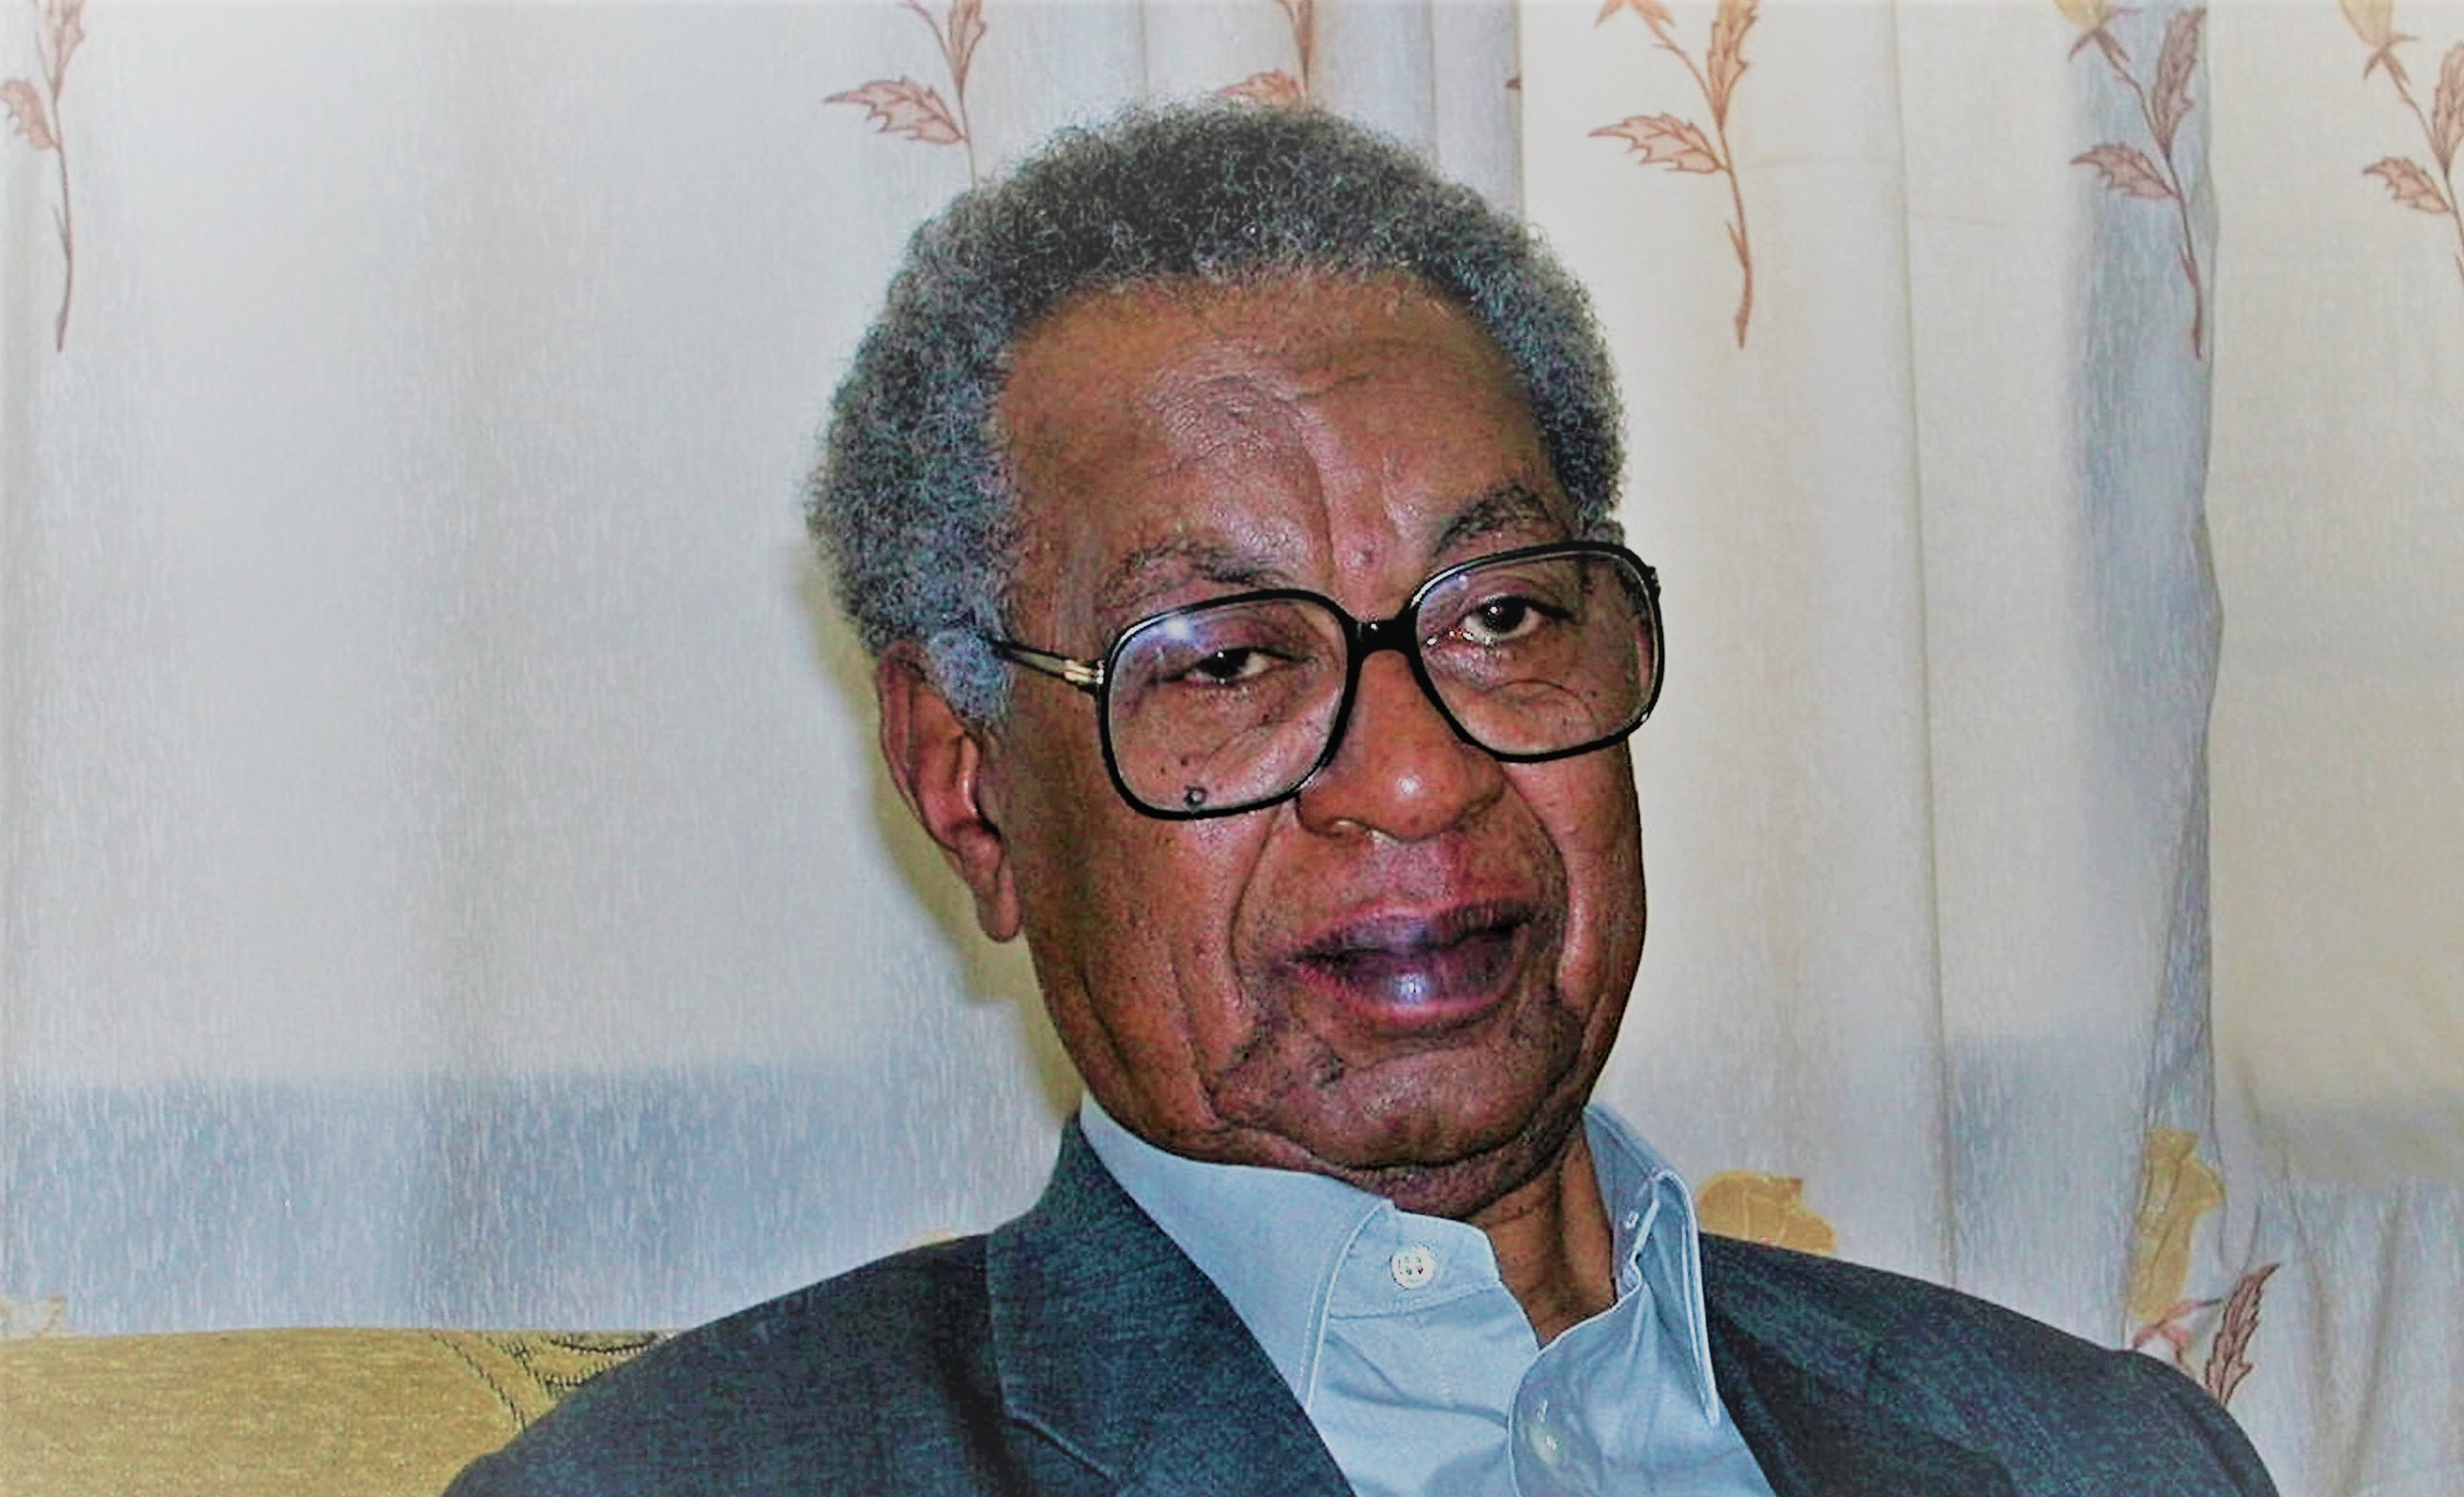 Tayeb Salih, one of Sudan's greatest authors of the twentieth century.